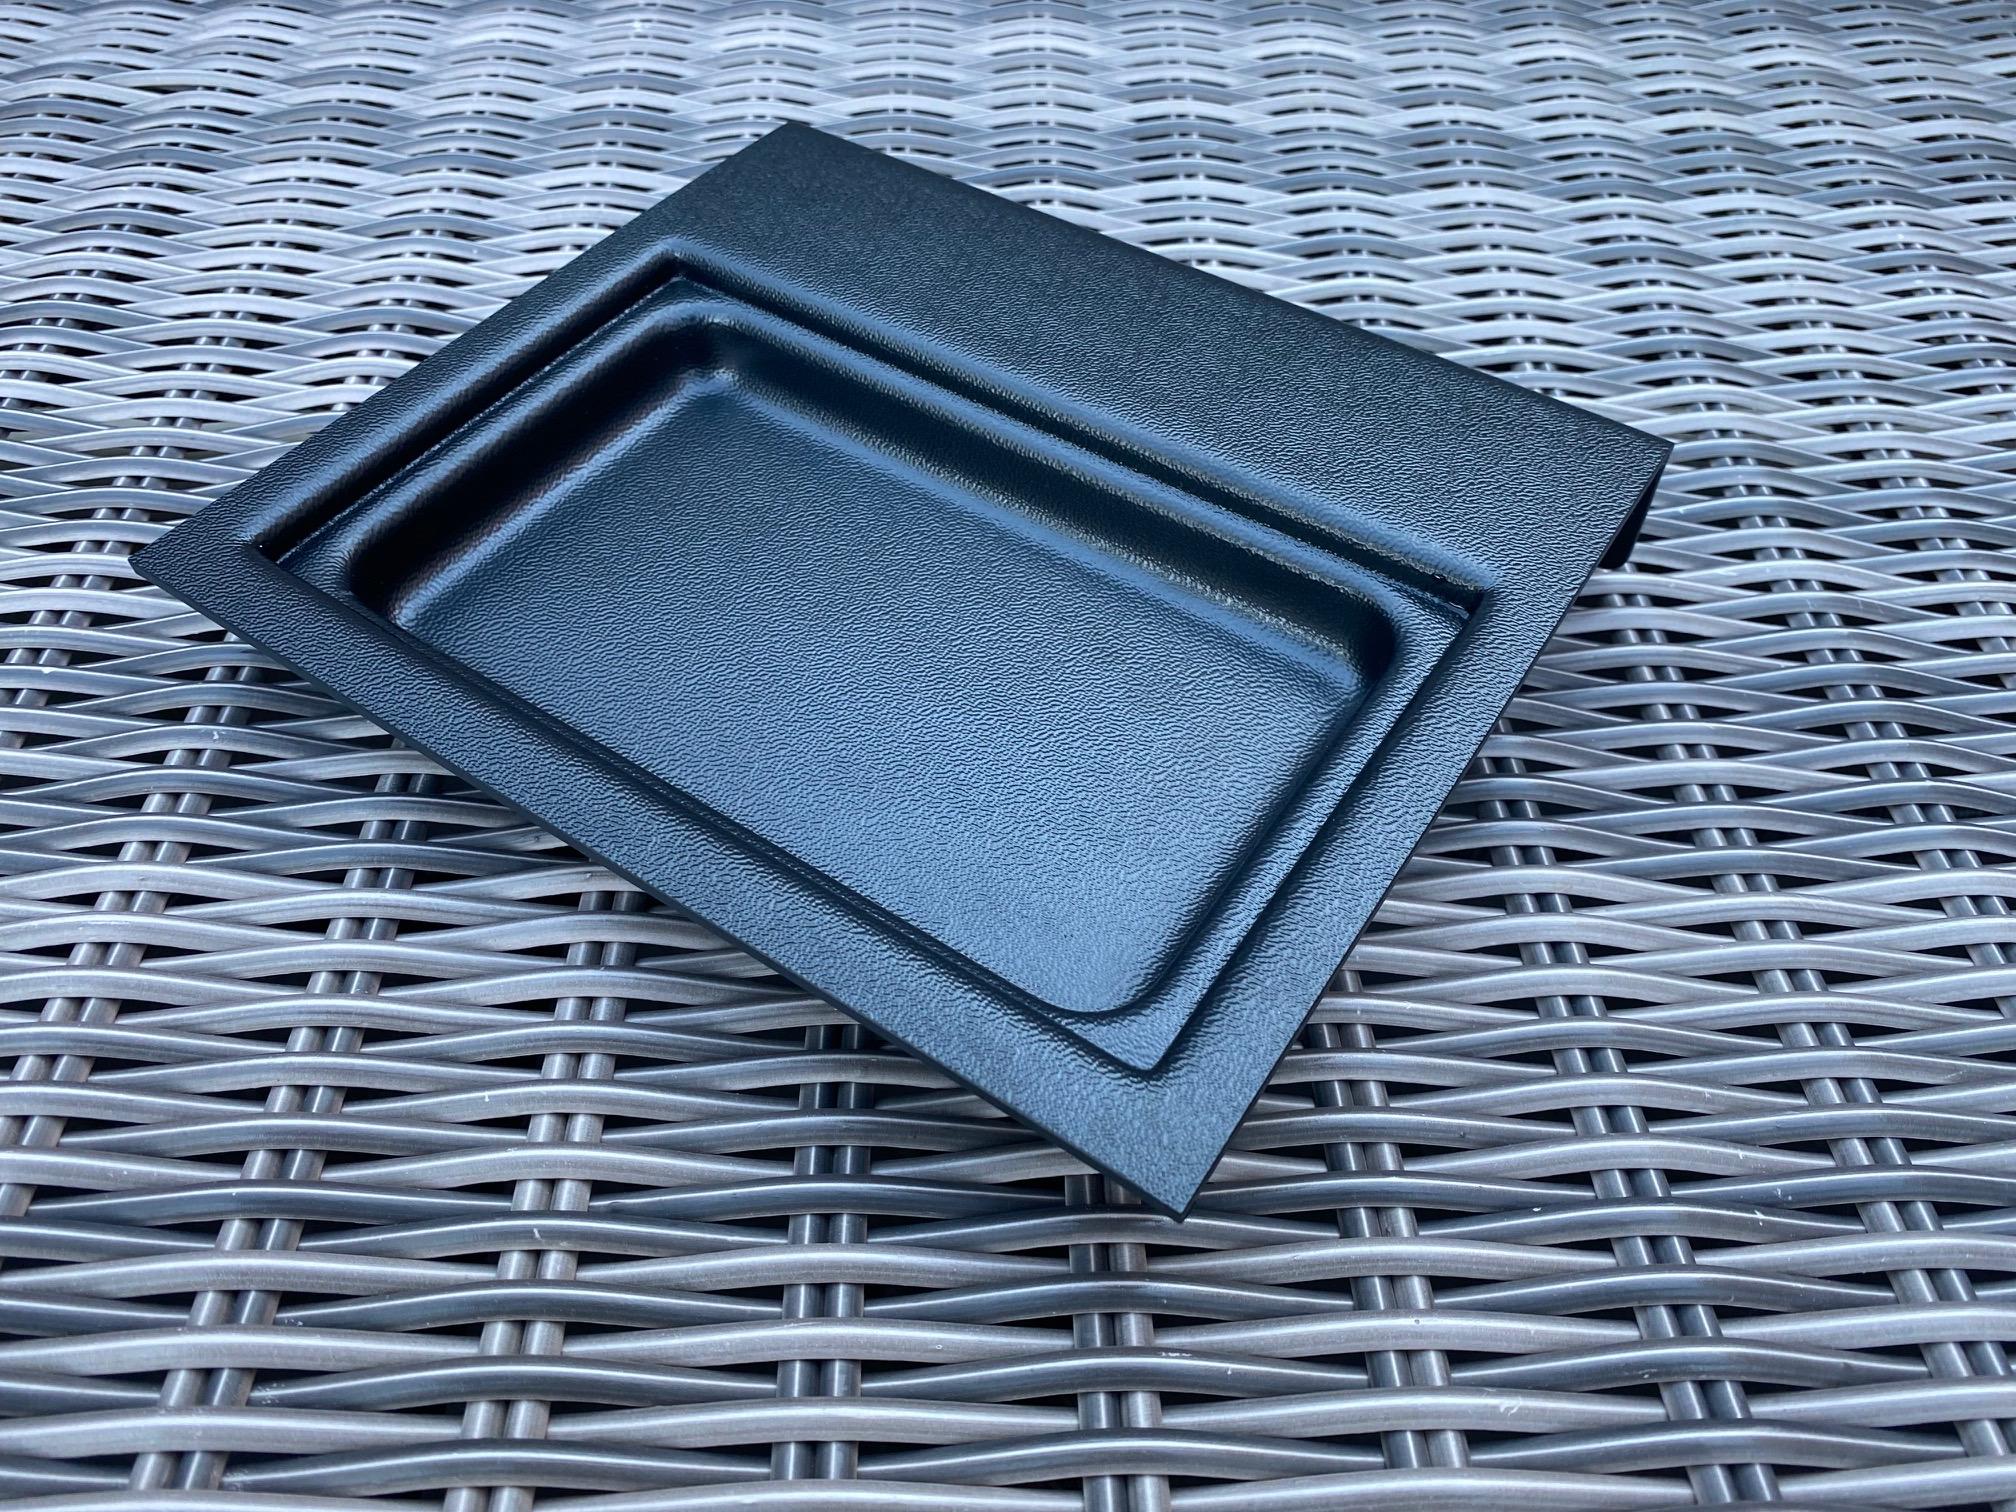 Deep slim drip tray back top